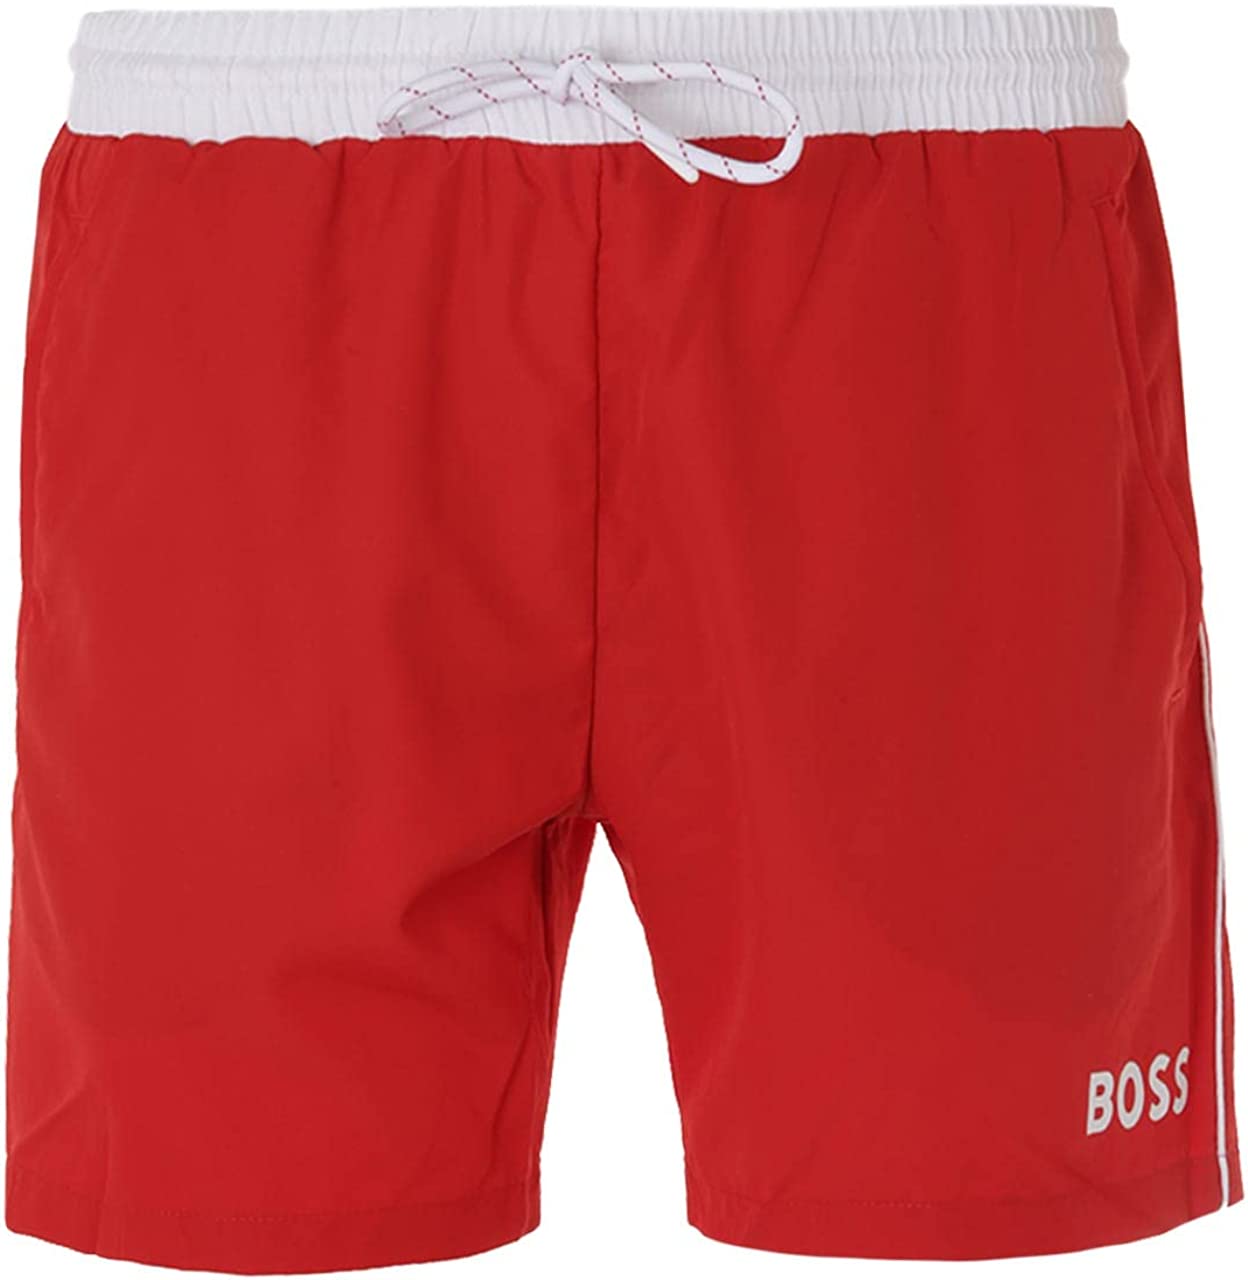 Hugo Boss Men Standard Medium Length Solid Swim Shorts Trunks Garnet Red